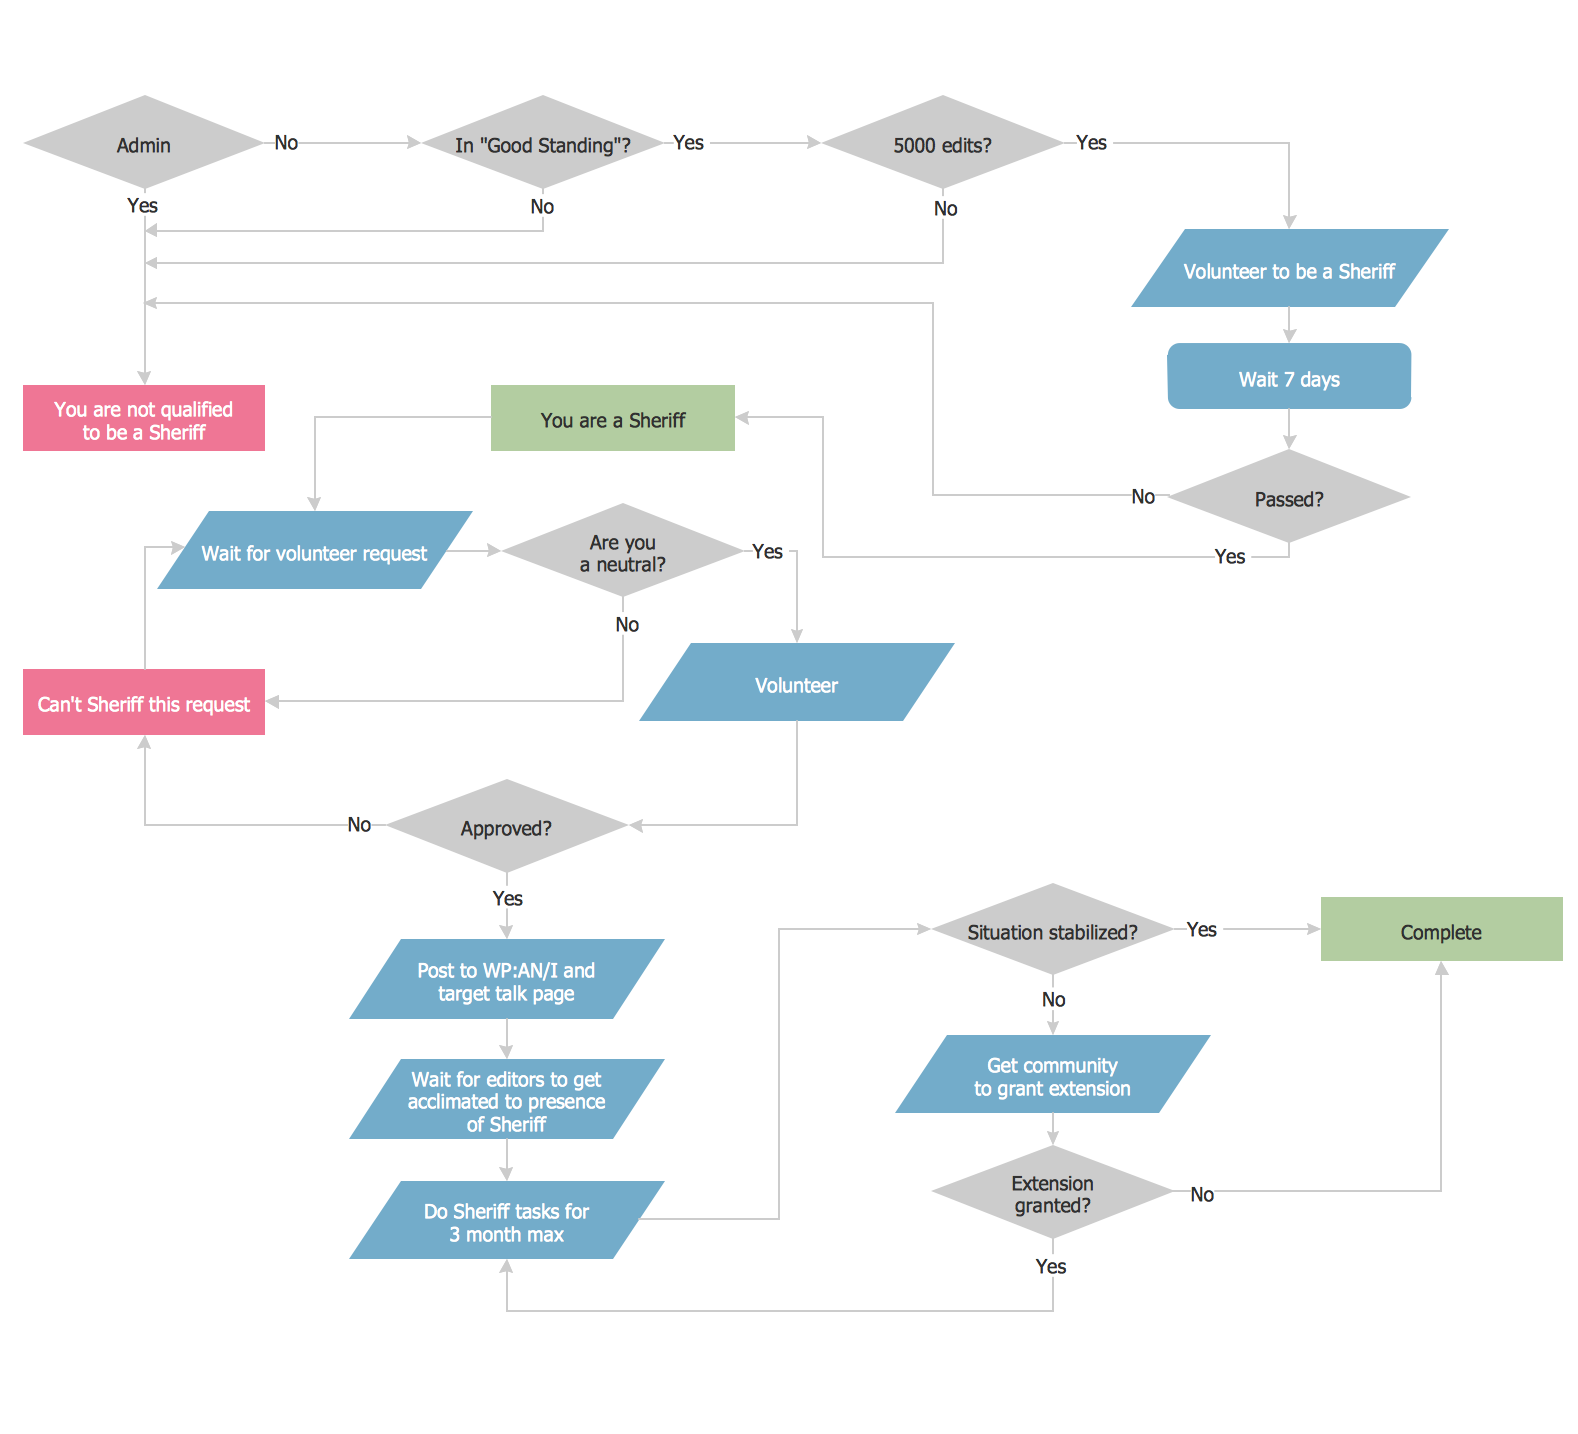 Schematic Process Flow Diagram